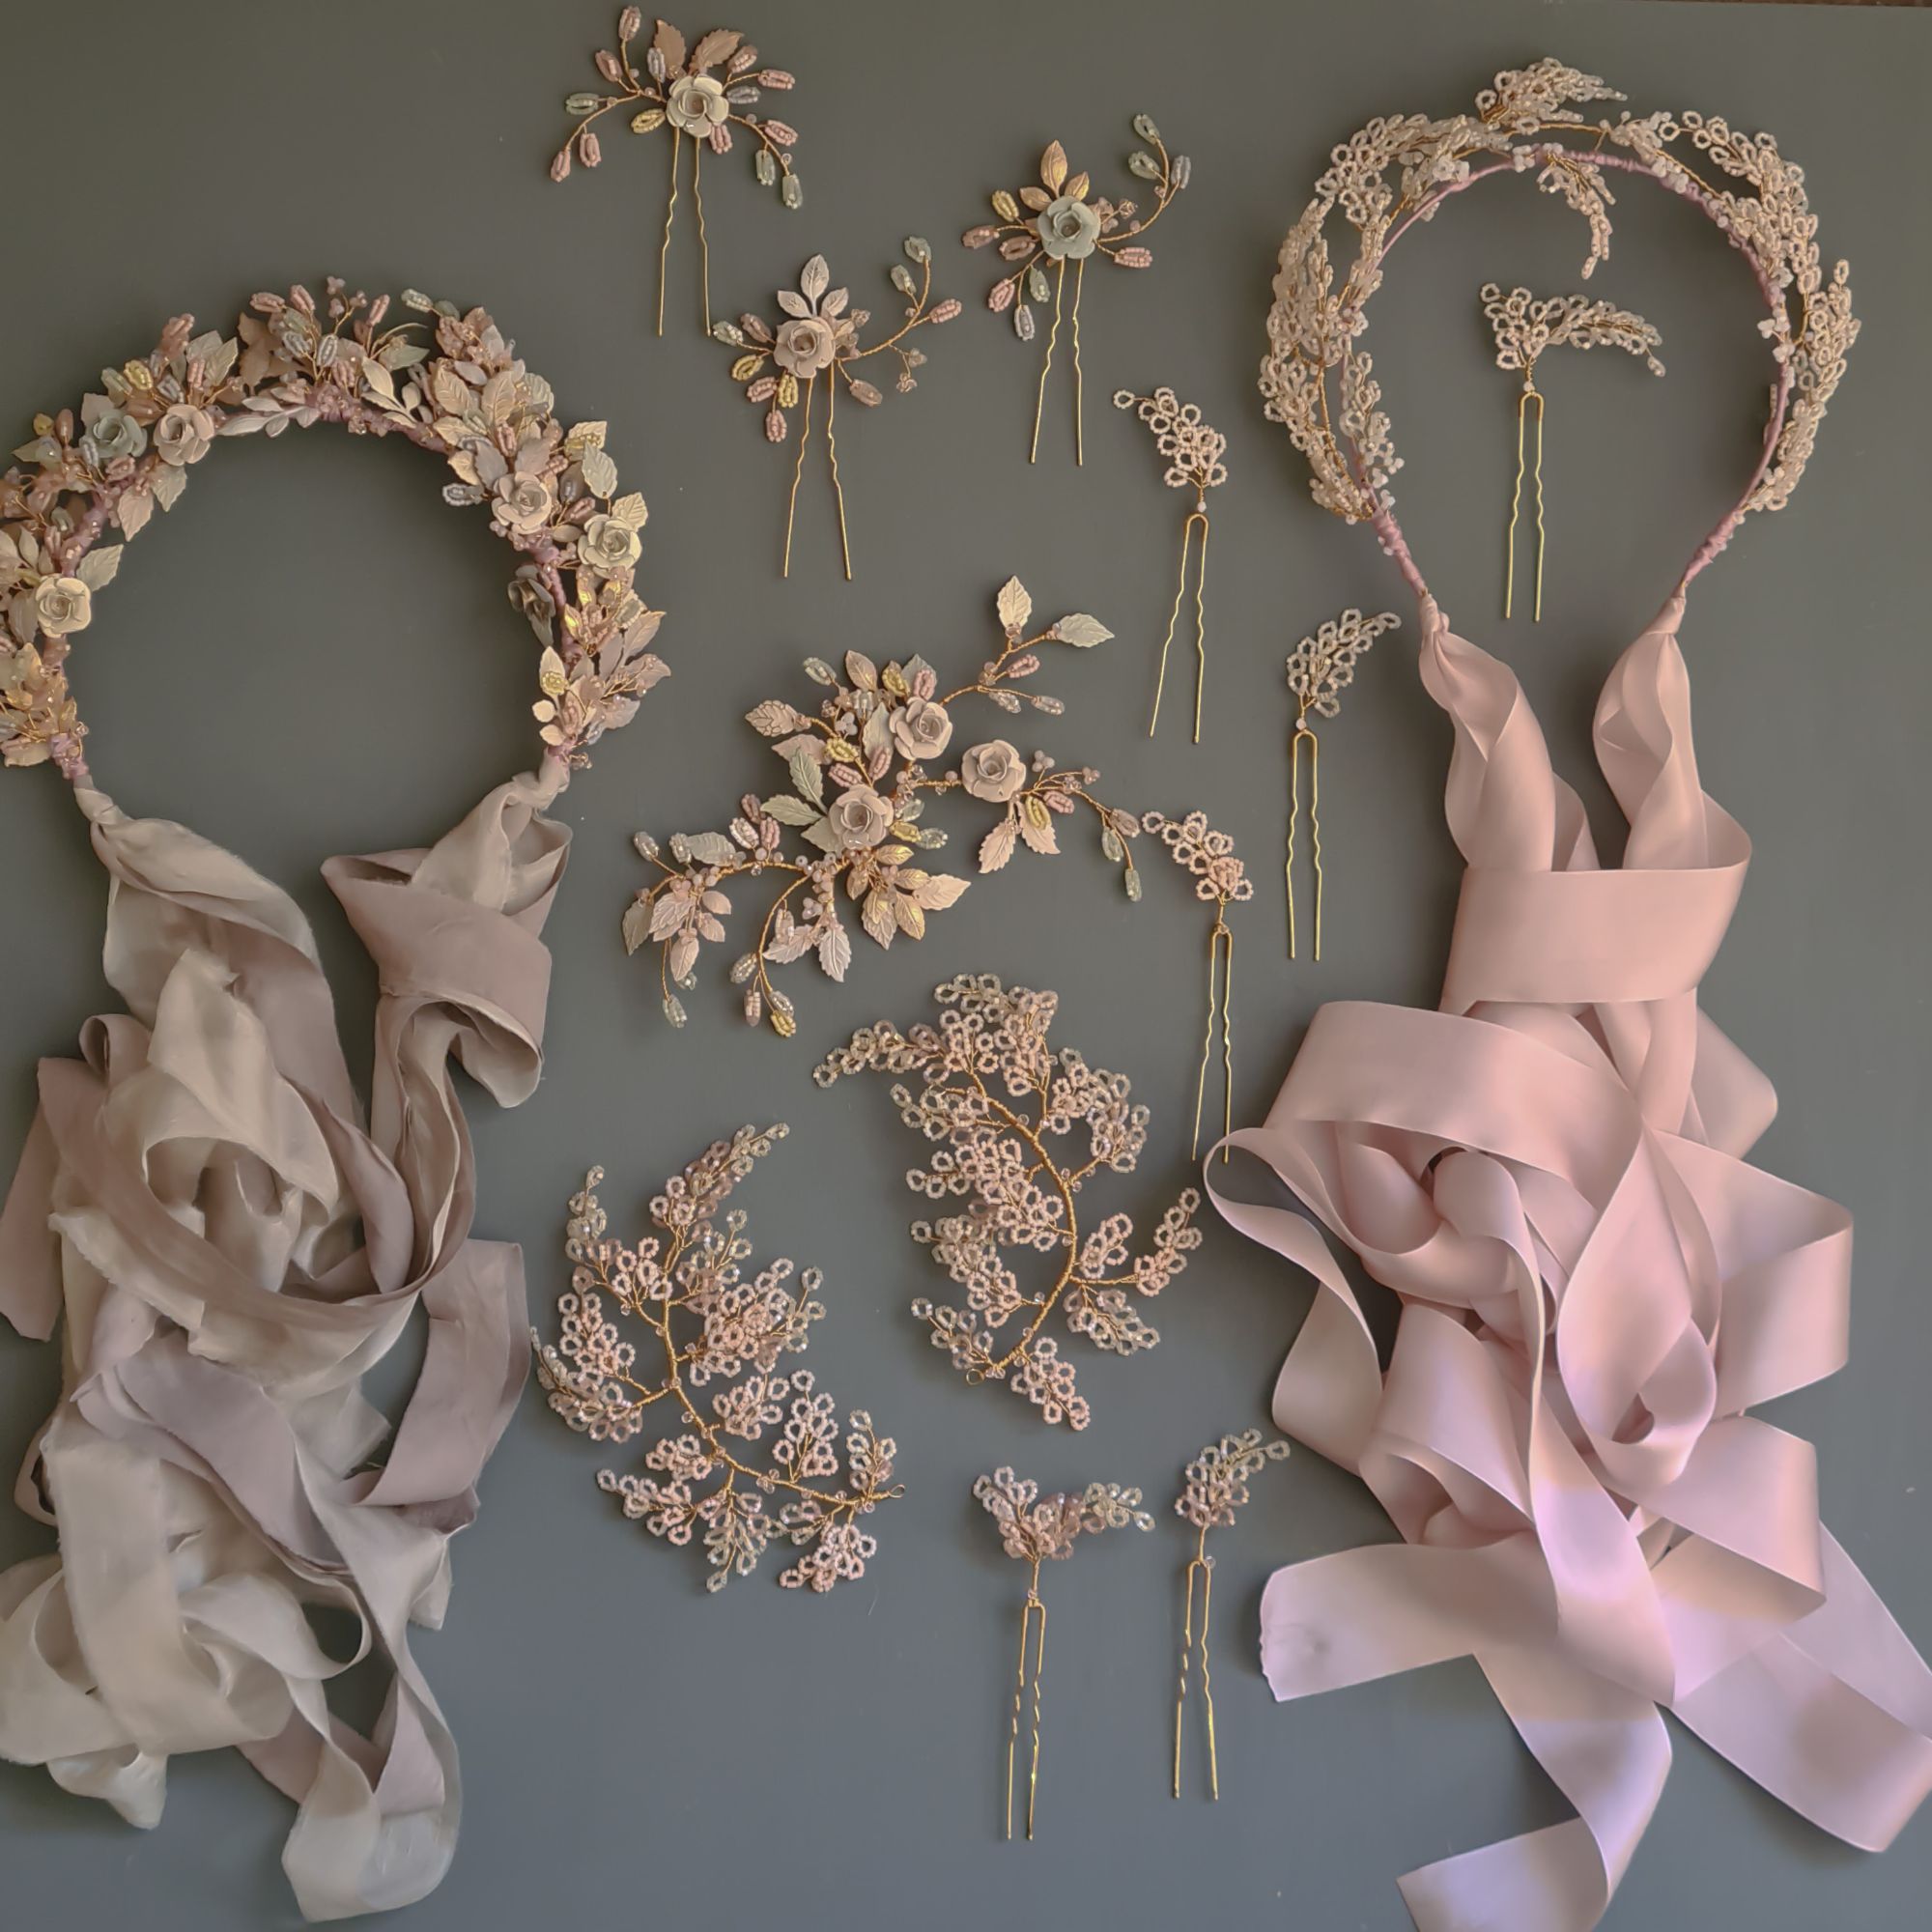 A selection of beautiful handmade floral bridal hair crowns, headpieces and hair pins made by British bridal designer Clare Lloyd